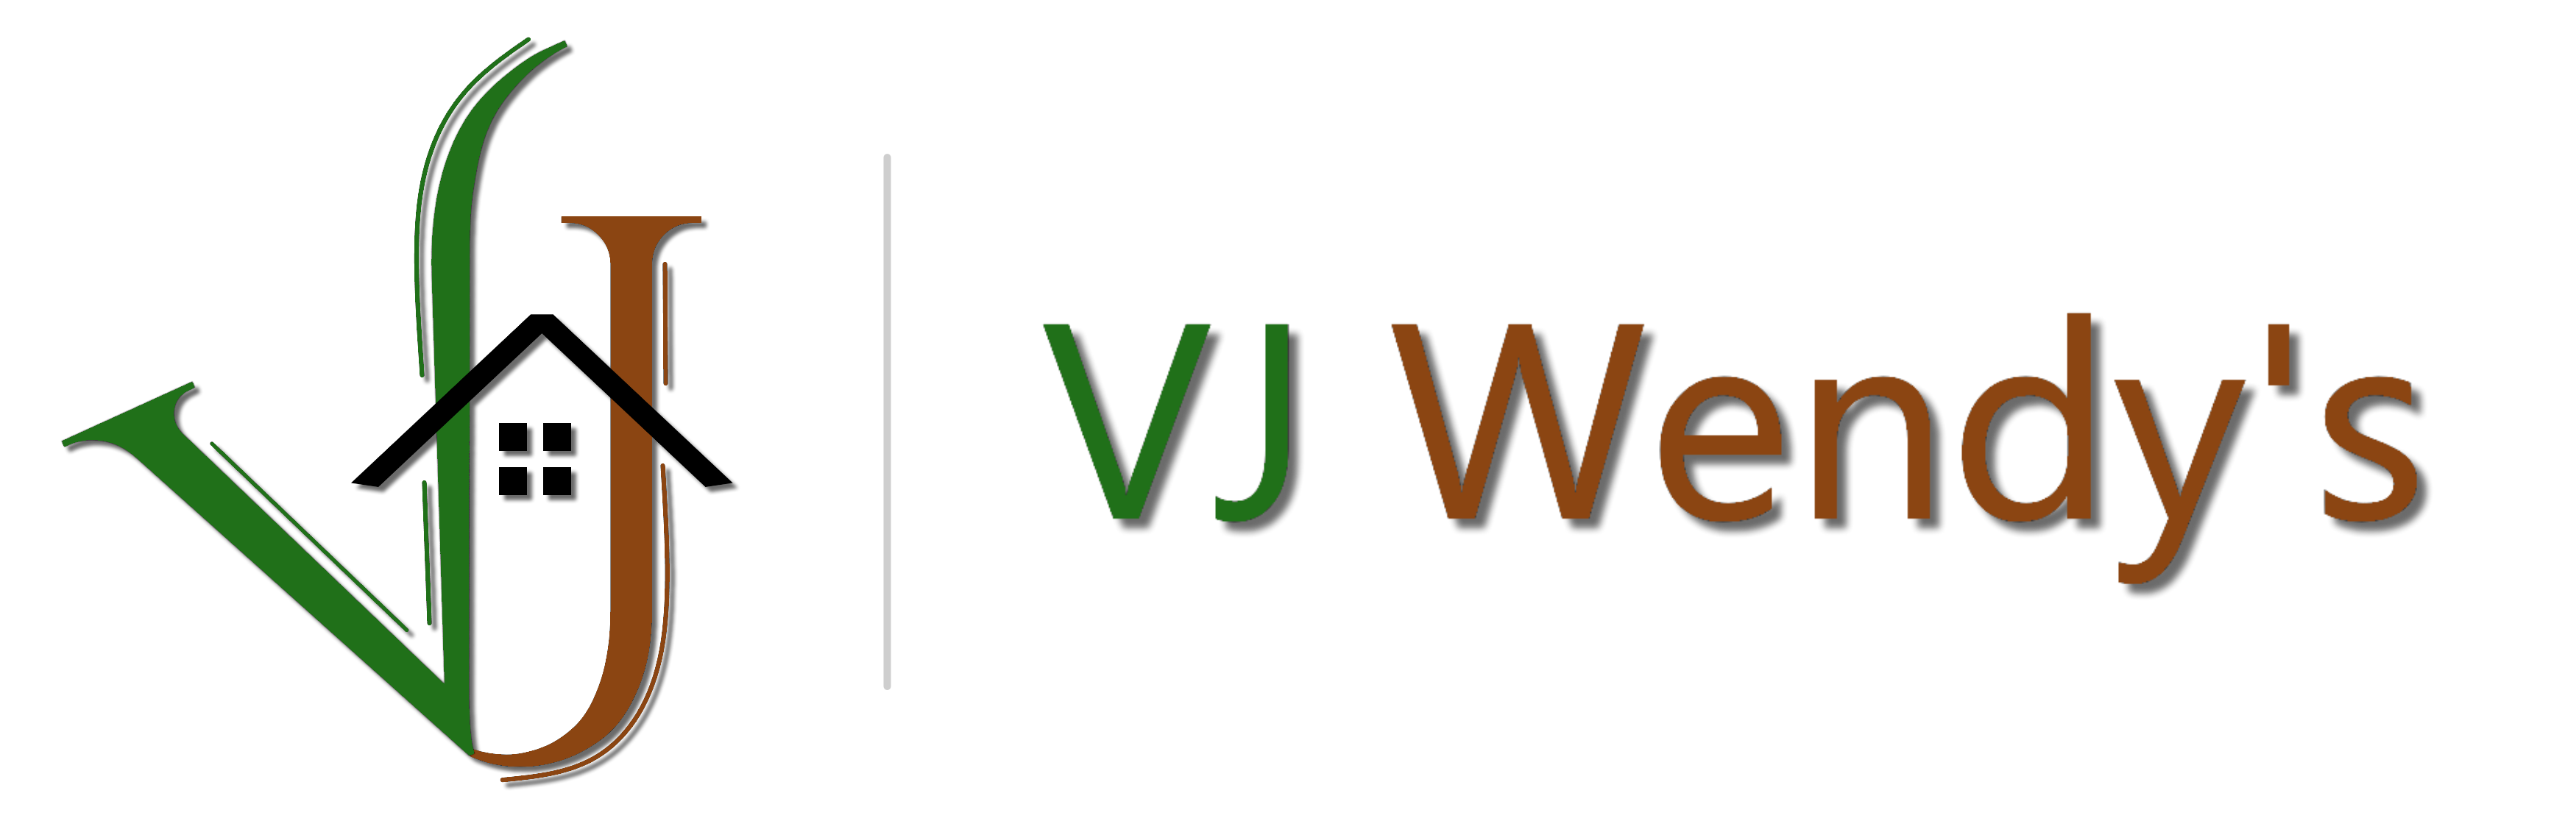 VJ Wendys Logo 4